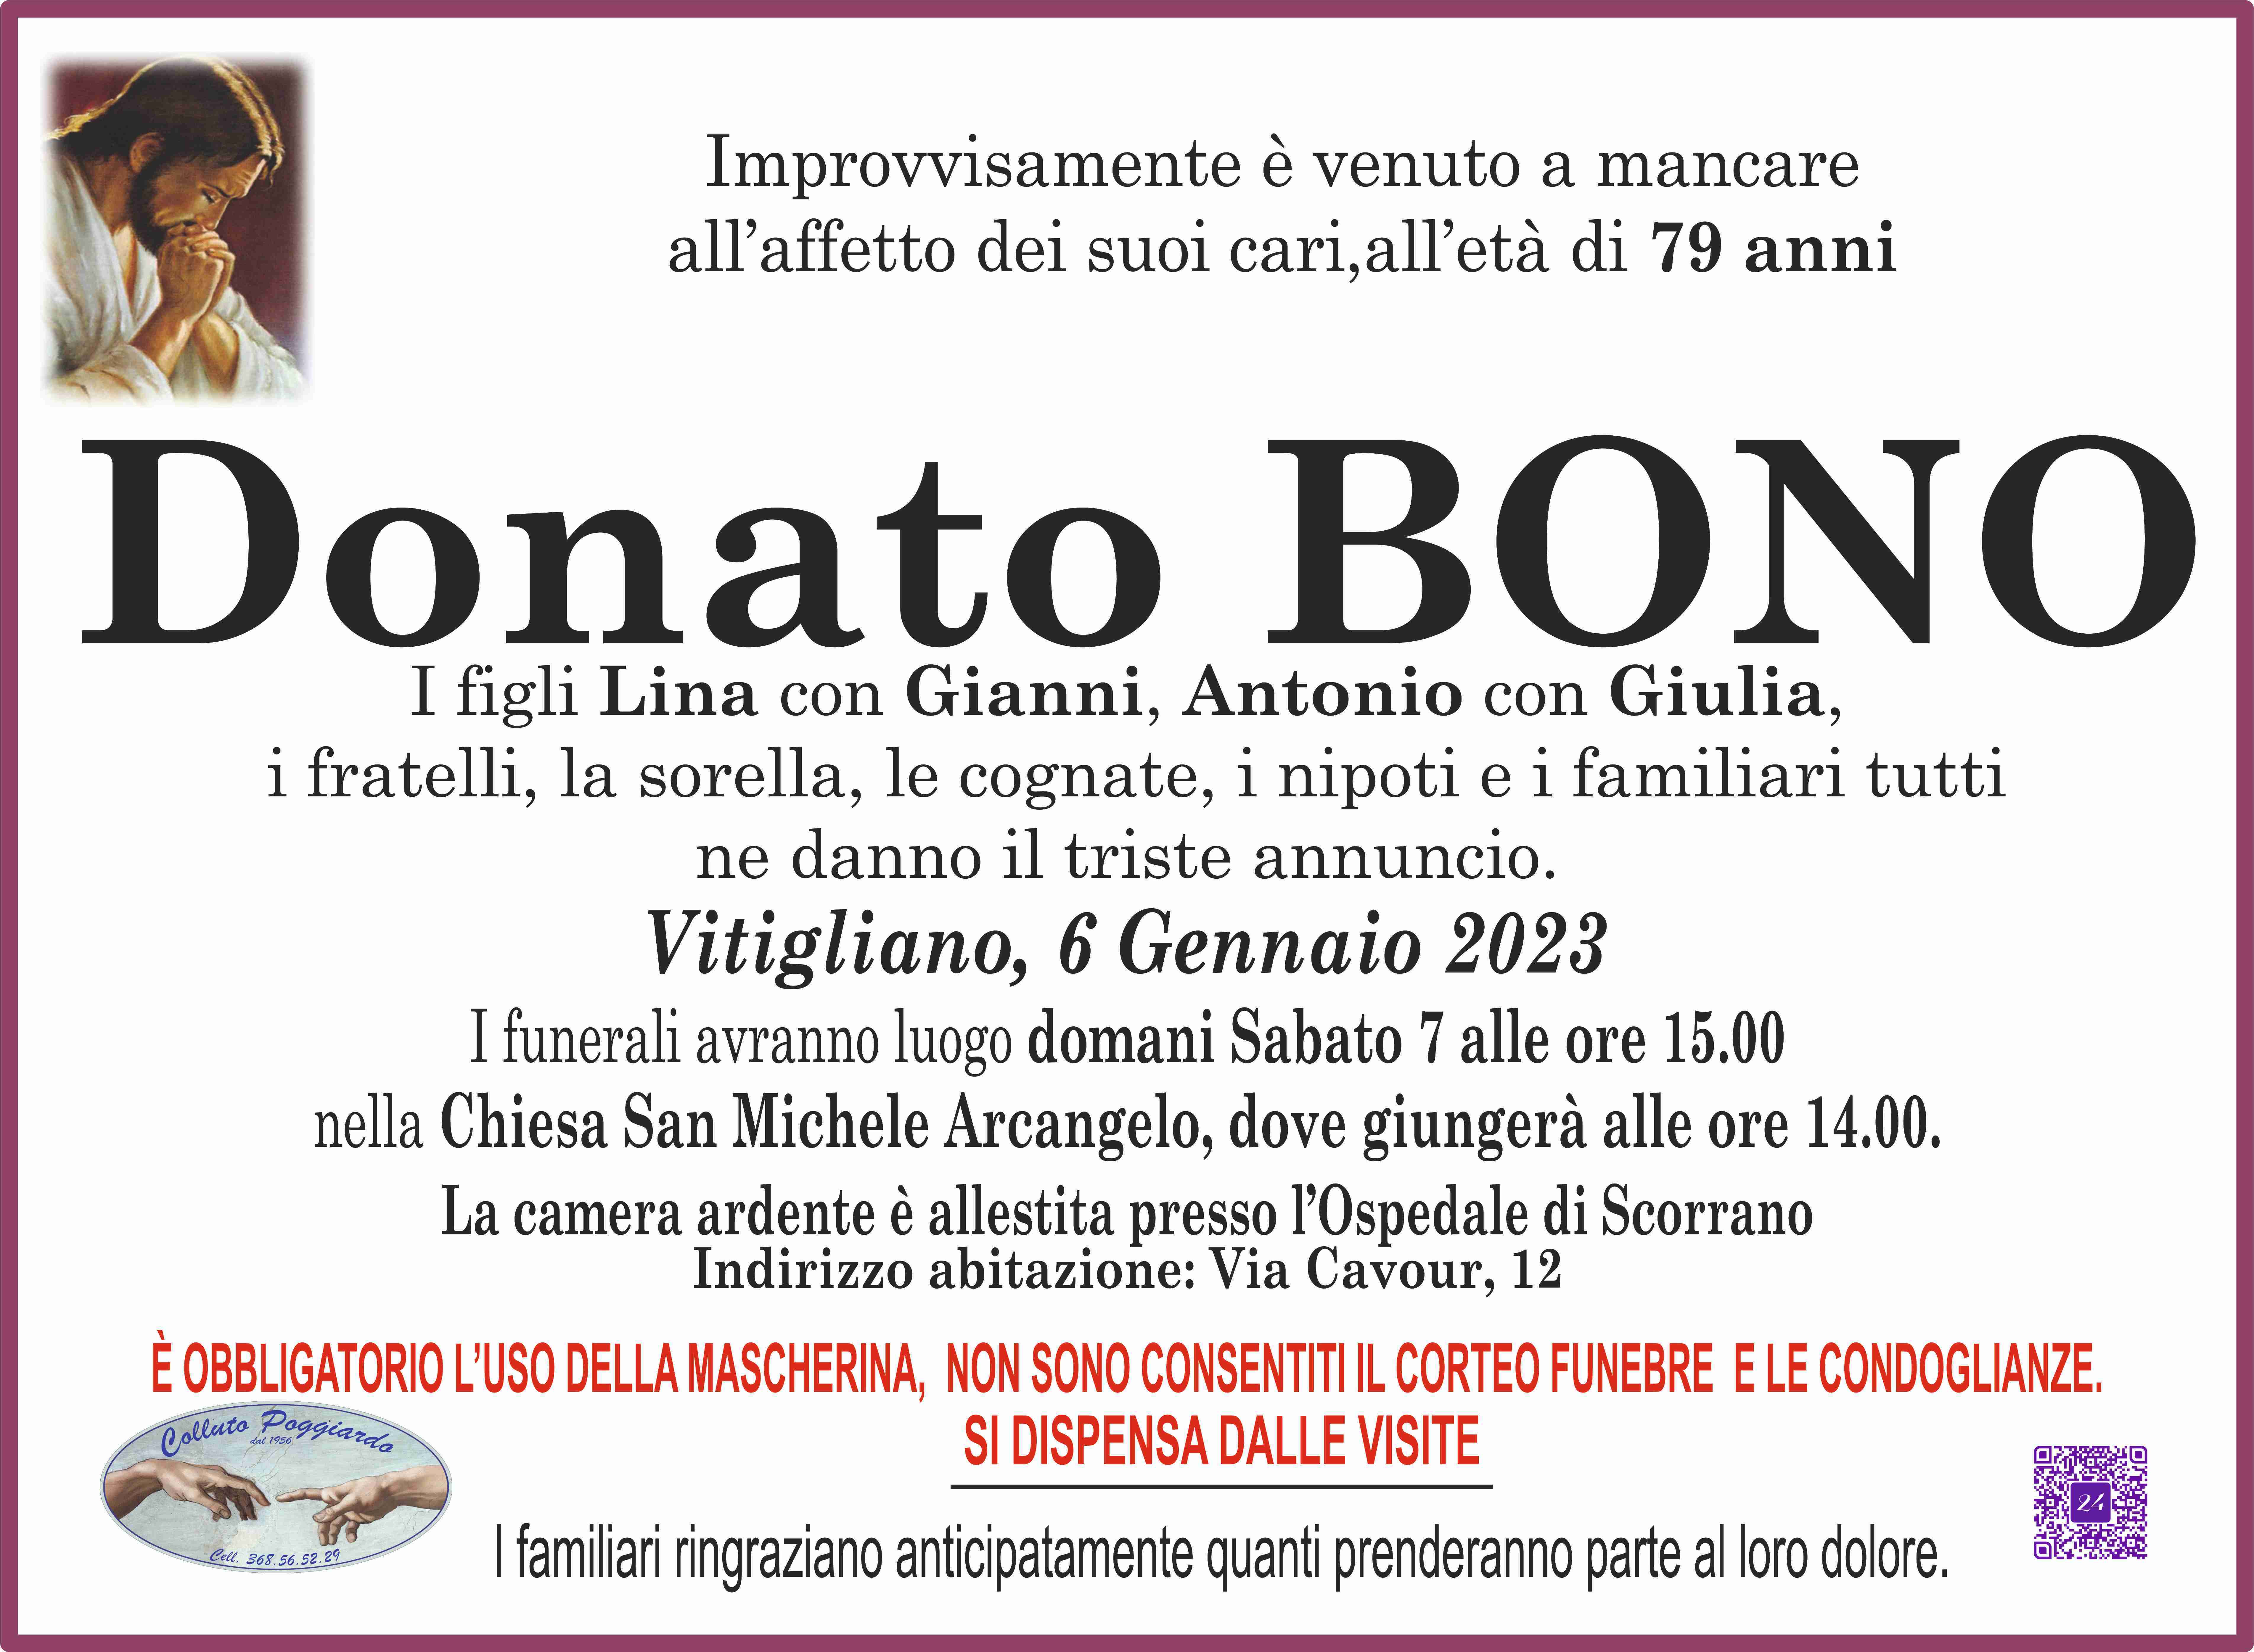 Donato Bono